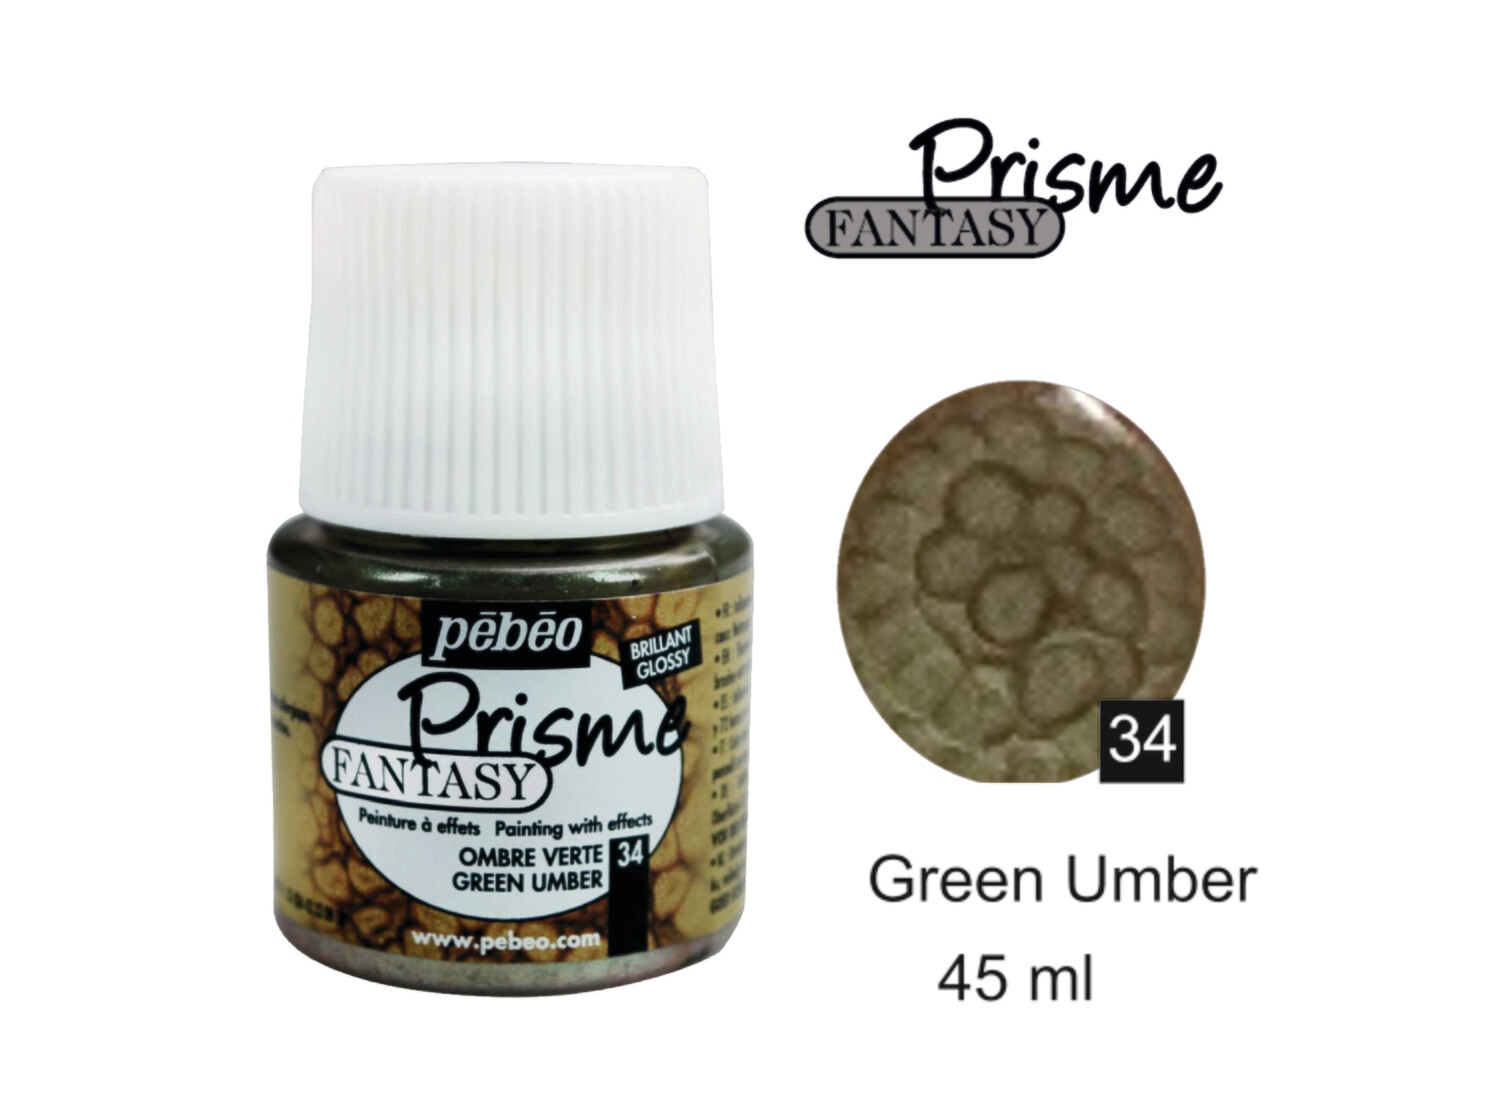 Fantasy Presme Decorative color Green umber No. 34 , 45 ml